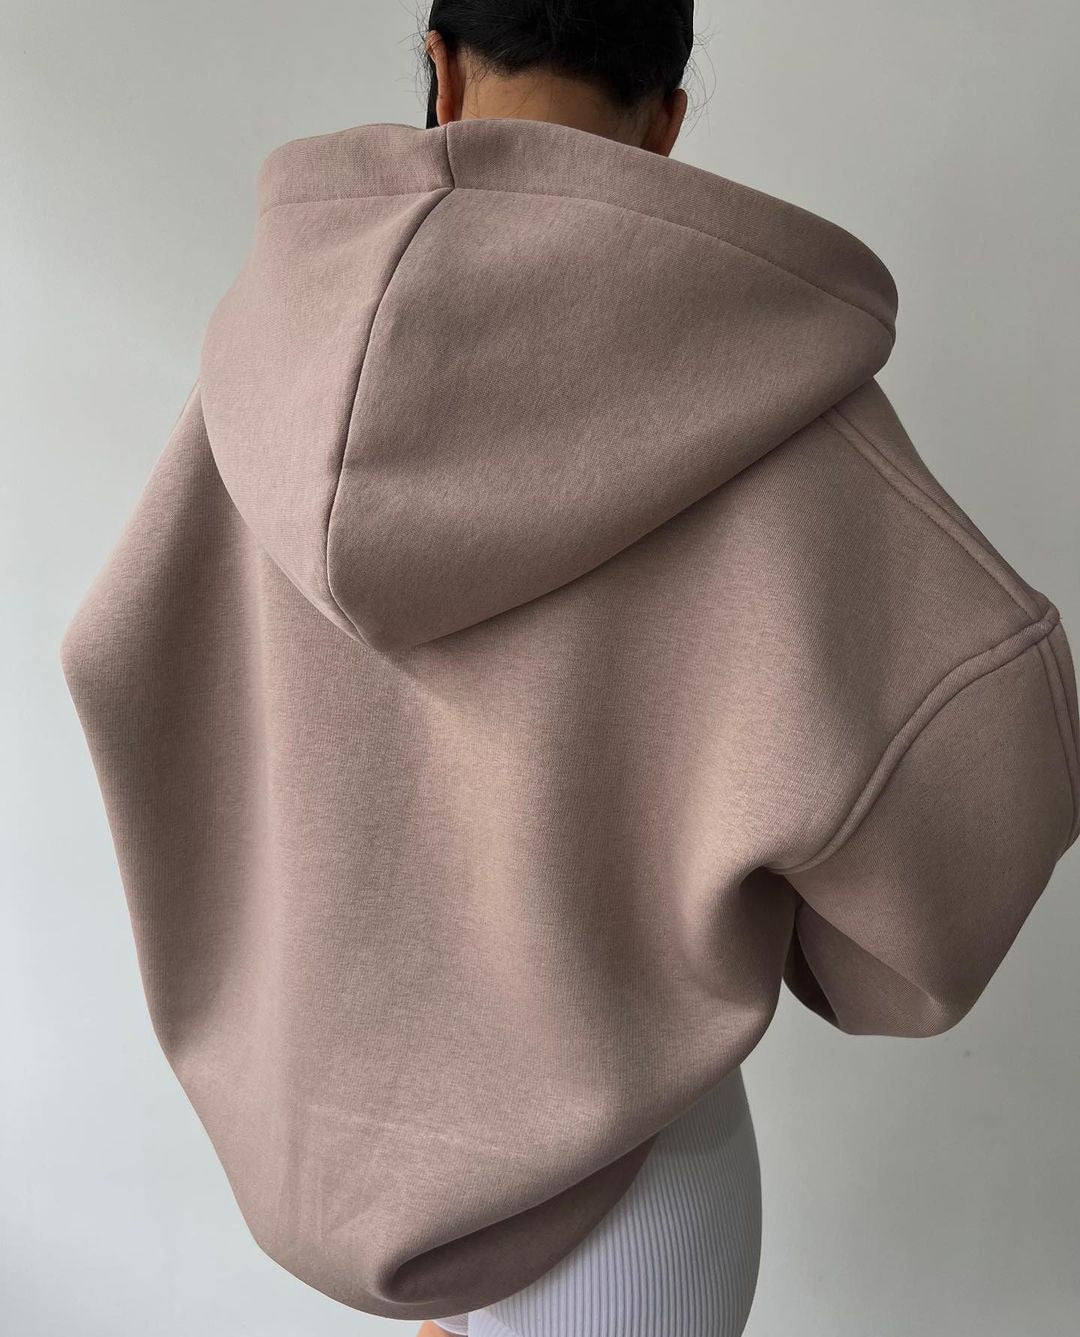 Fleece-lined Hooded Printed Long Sleeve Basic Sweaters